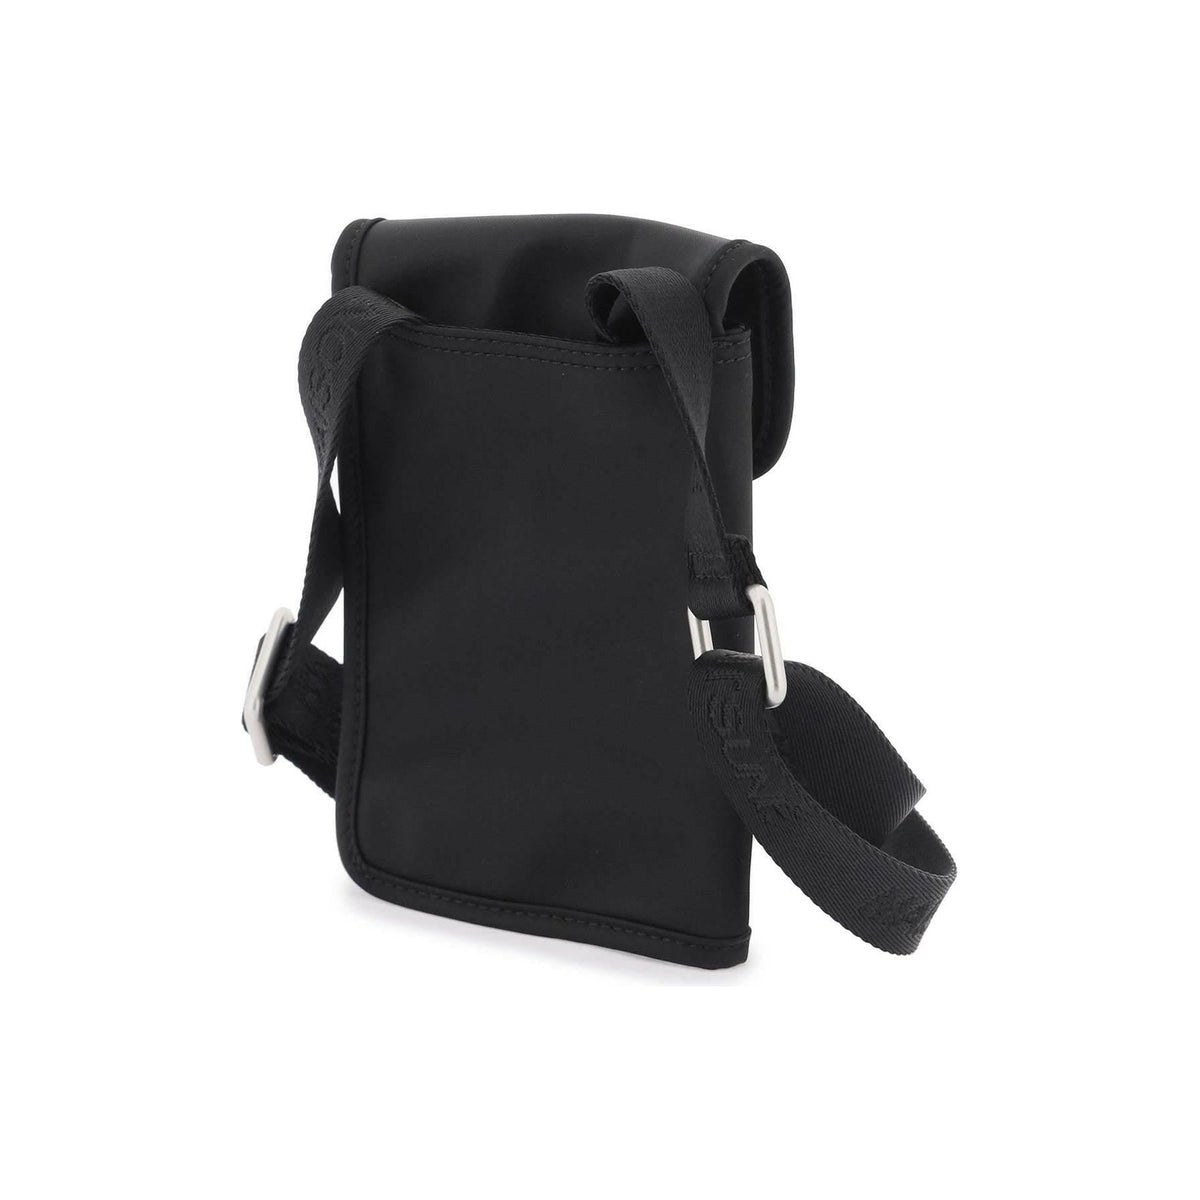 MAISON KITSUNE - Black Shoulder Bag The Traveller Pouch - JOHN JULIA